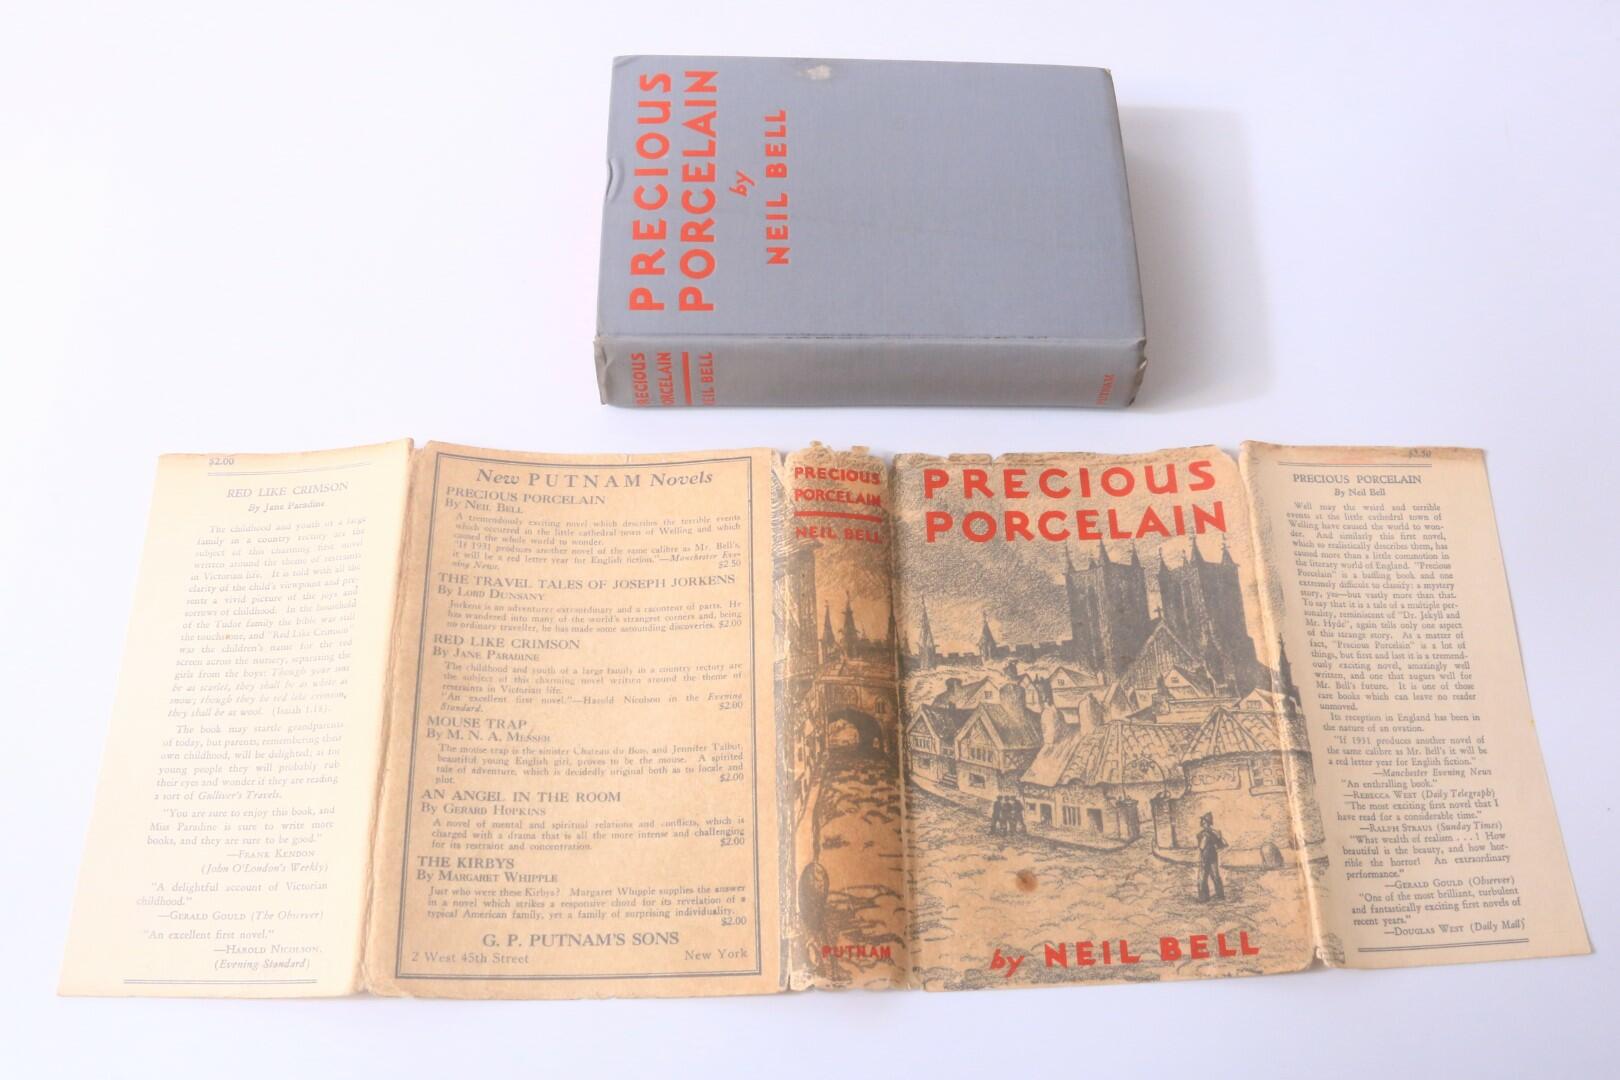 Neil Bell - Precious Porcelain - Putnam, 1931, Signed First Edition.